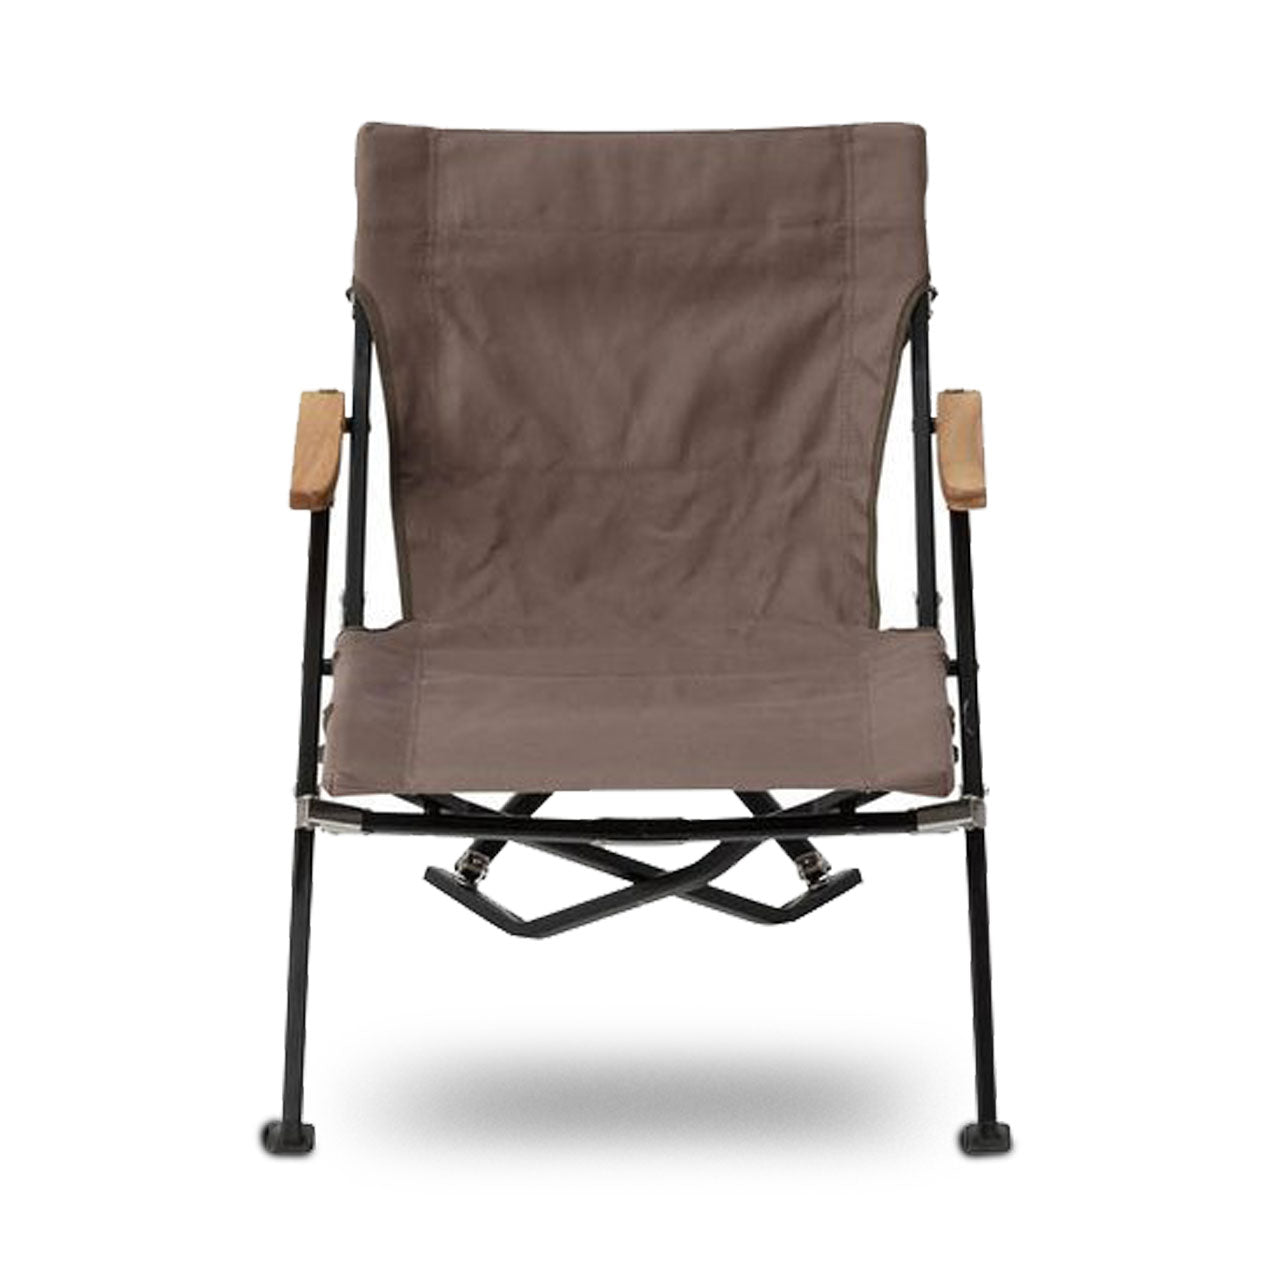 Snow Peak Beach Chair | Uncrate